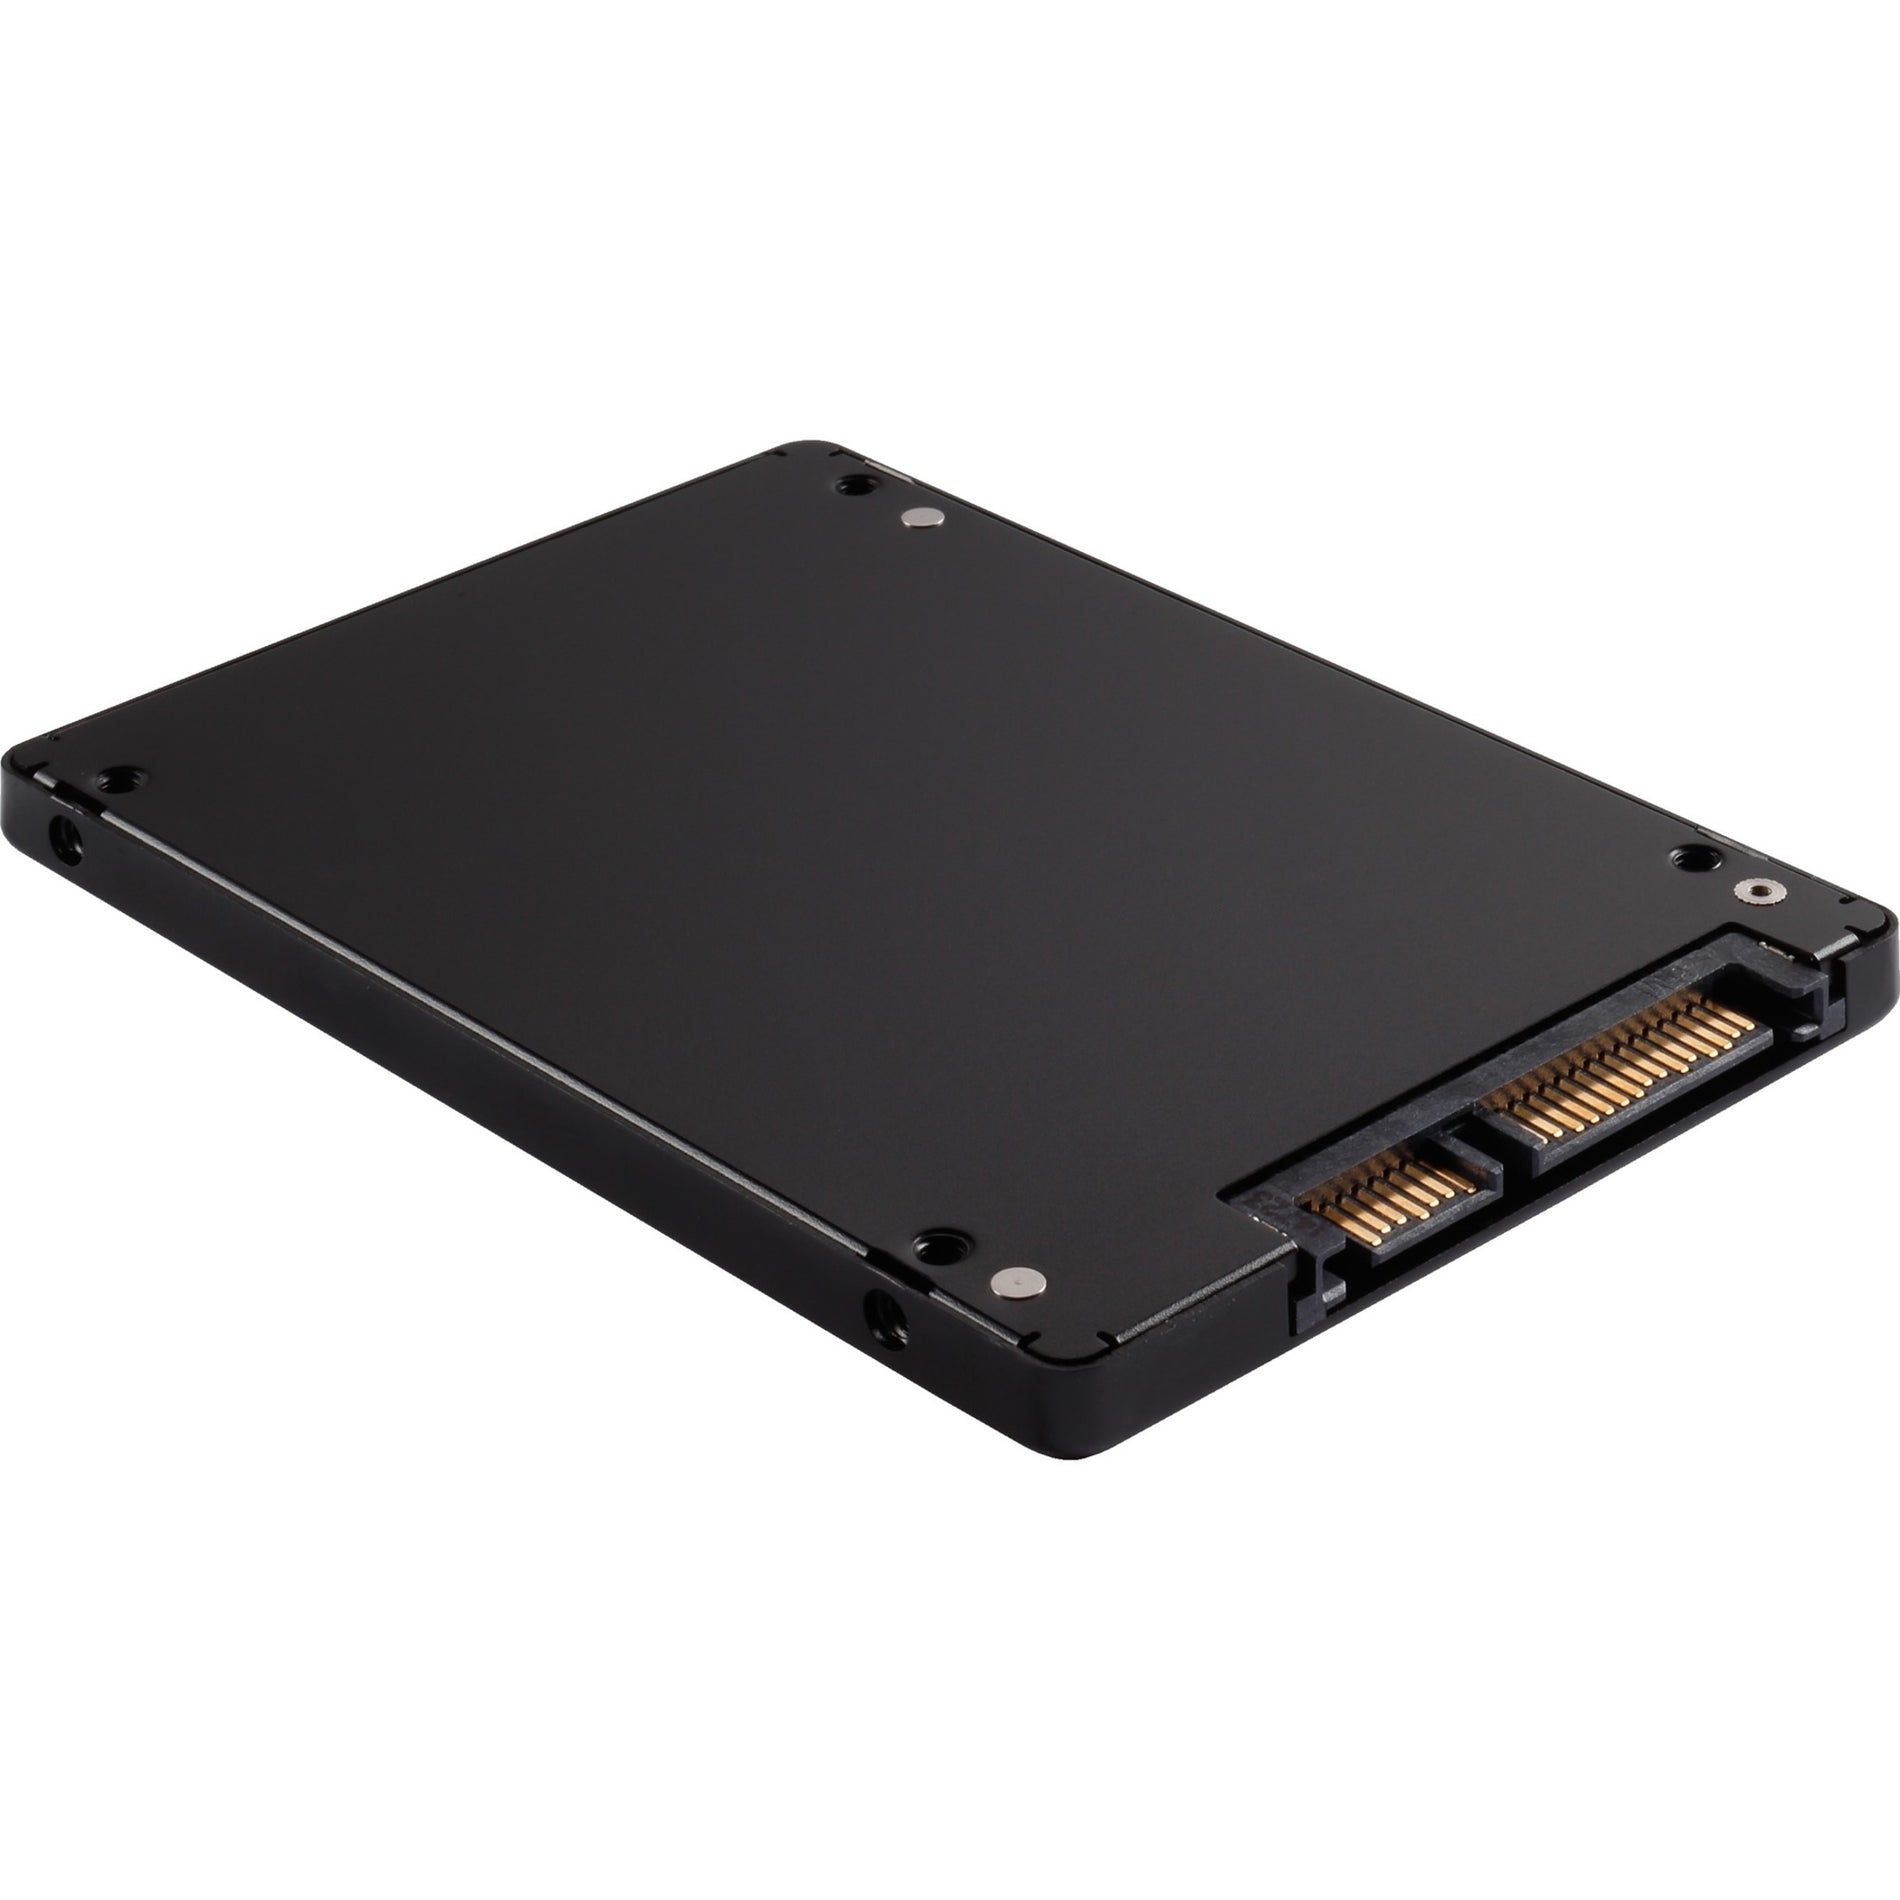 VisionTek 901296 PRO HXS 7mm 2.5" SSD Series, 256GB Storage Capacity